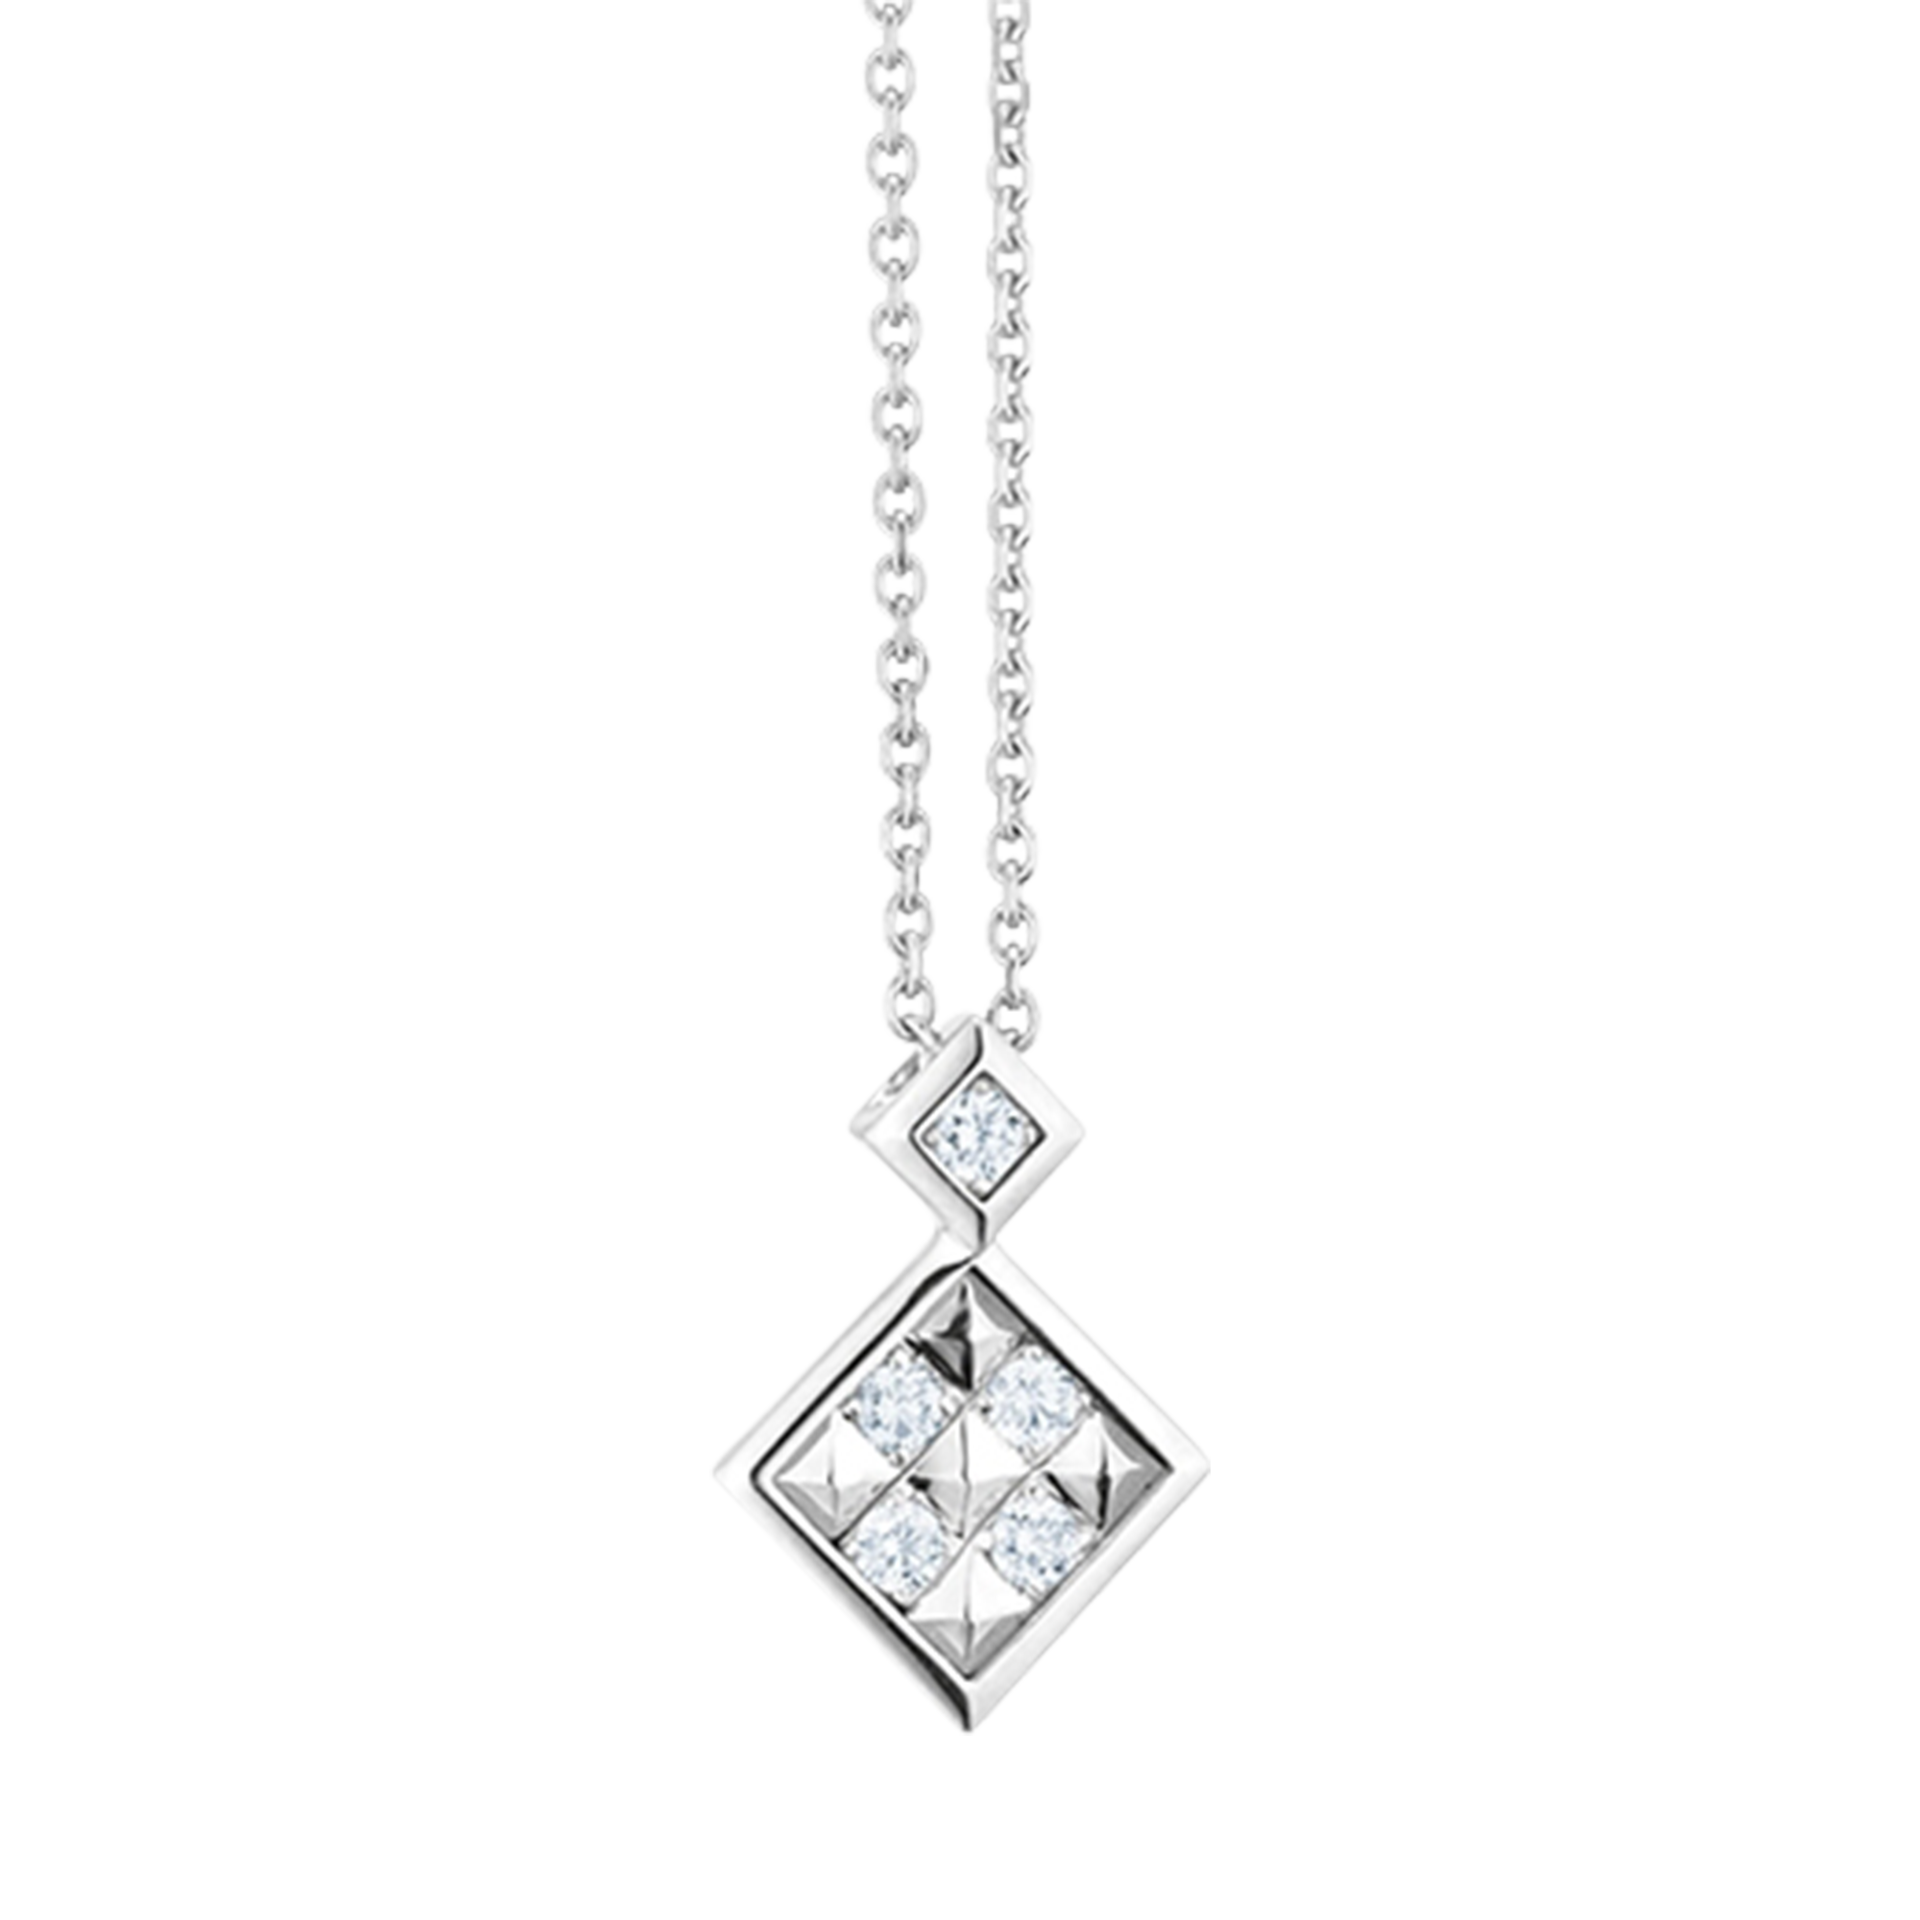 Capolavoro Manhattan necklace with pendant